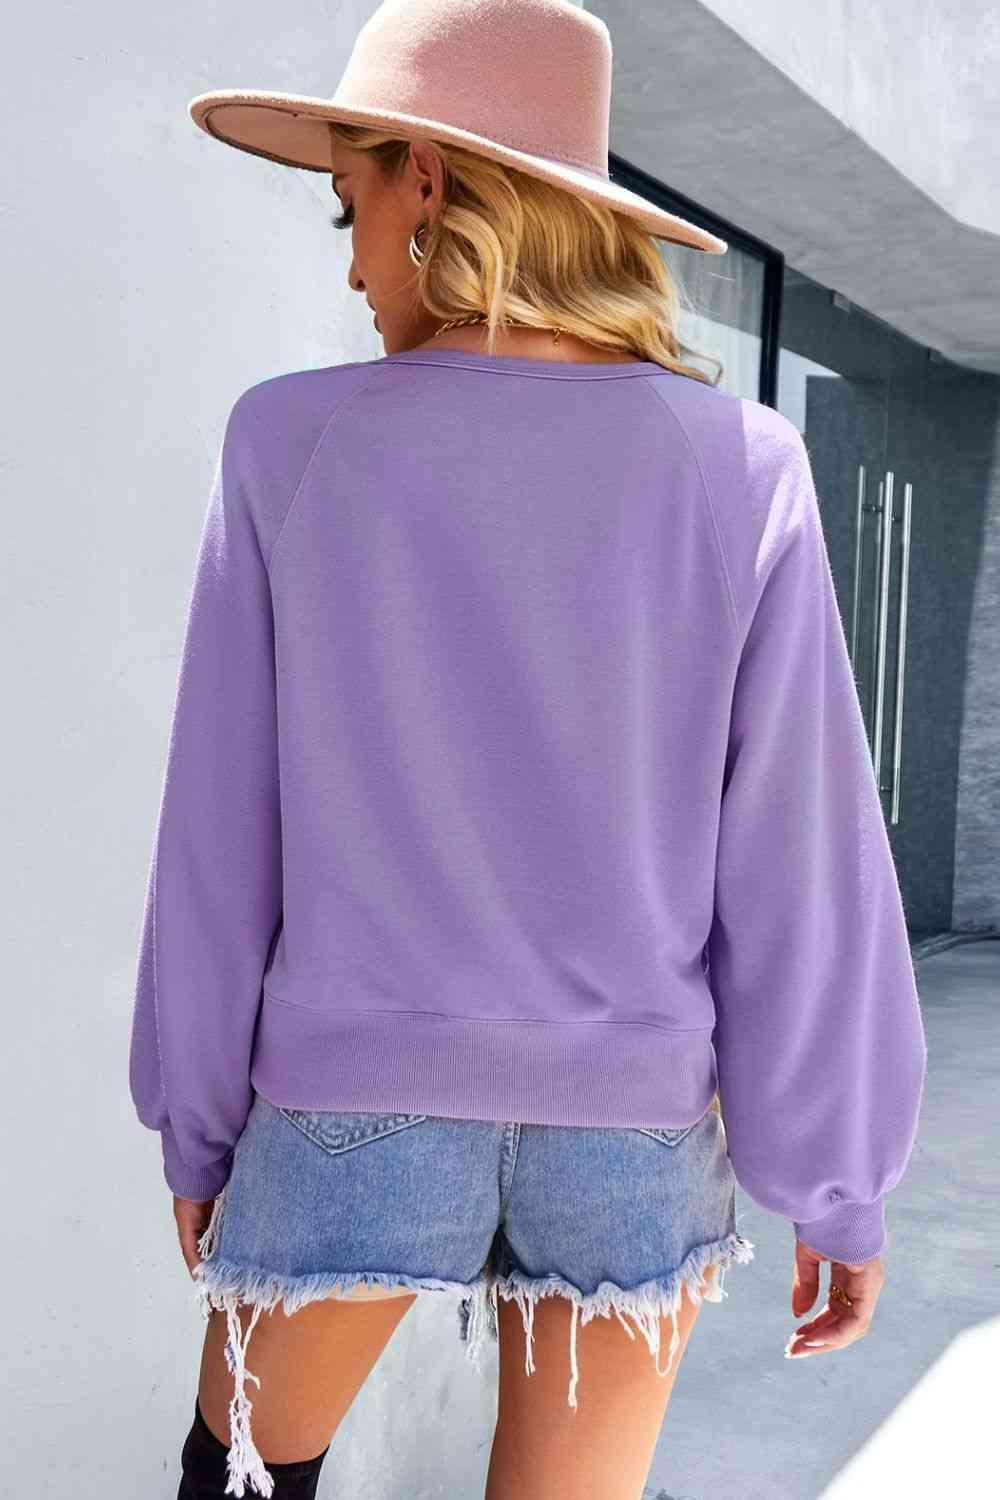 a woman wearing a purple sweatshirt and denim shorts